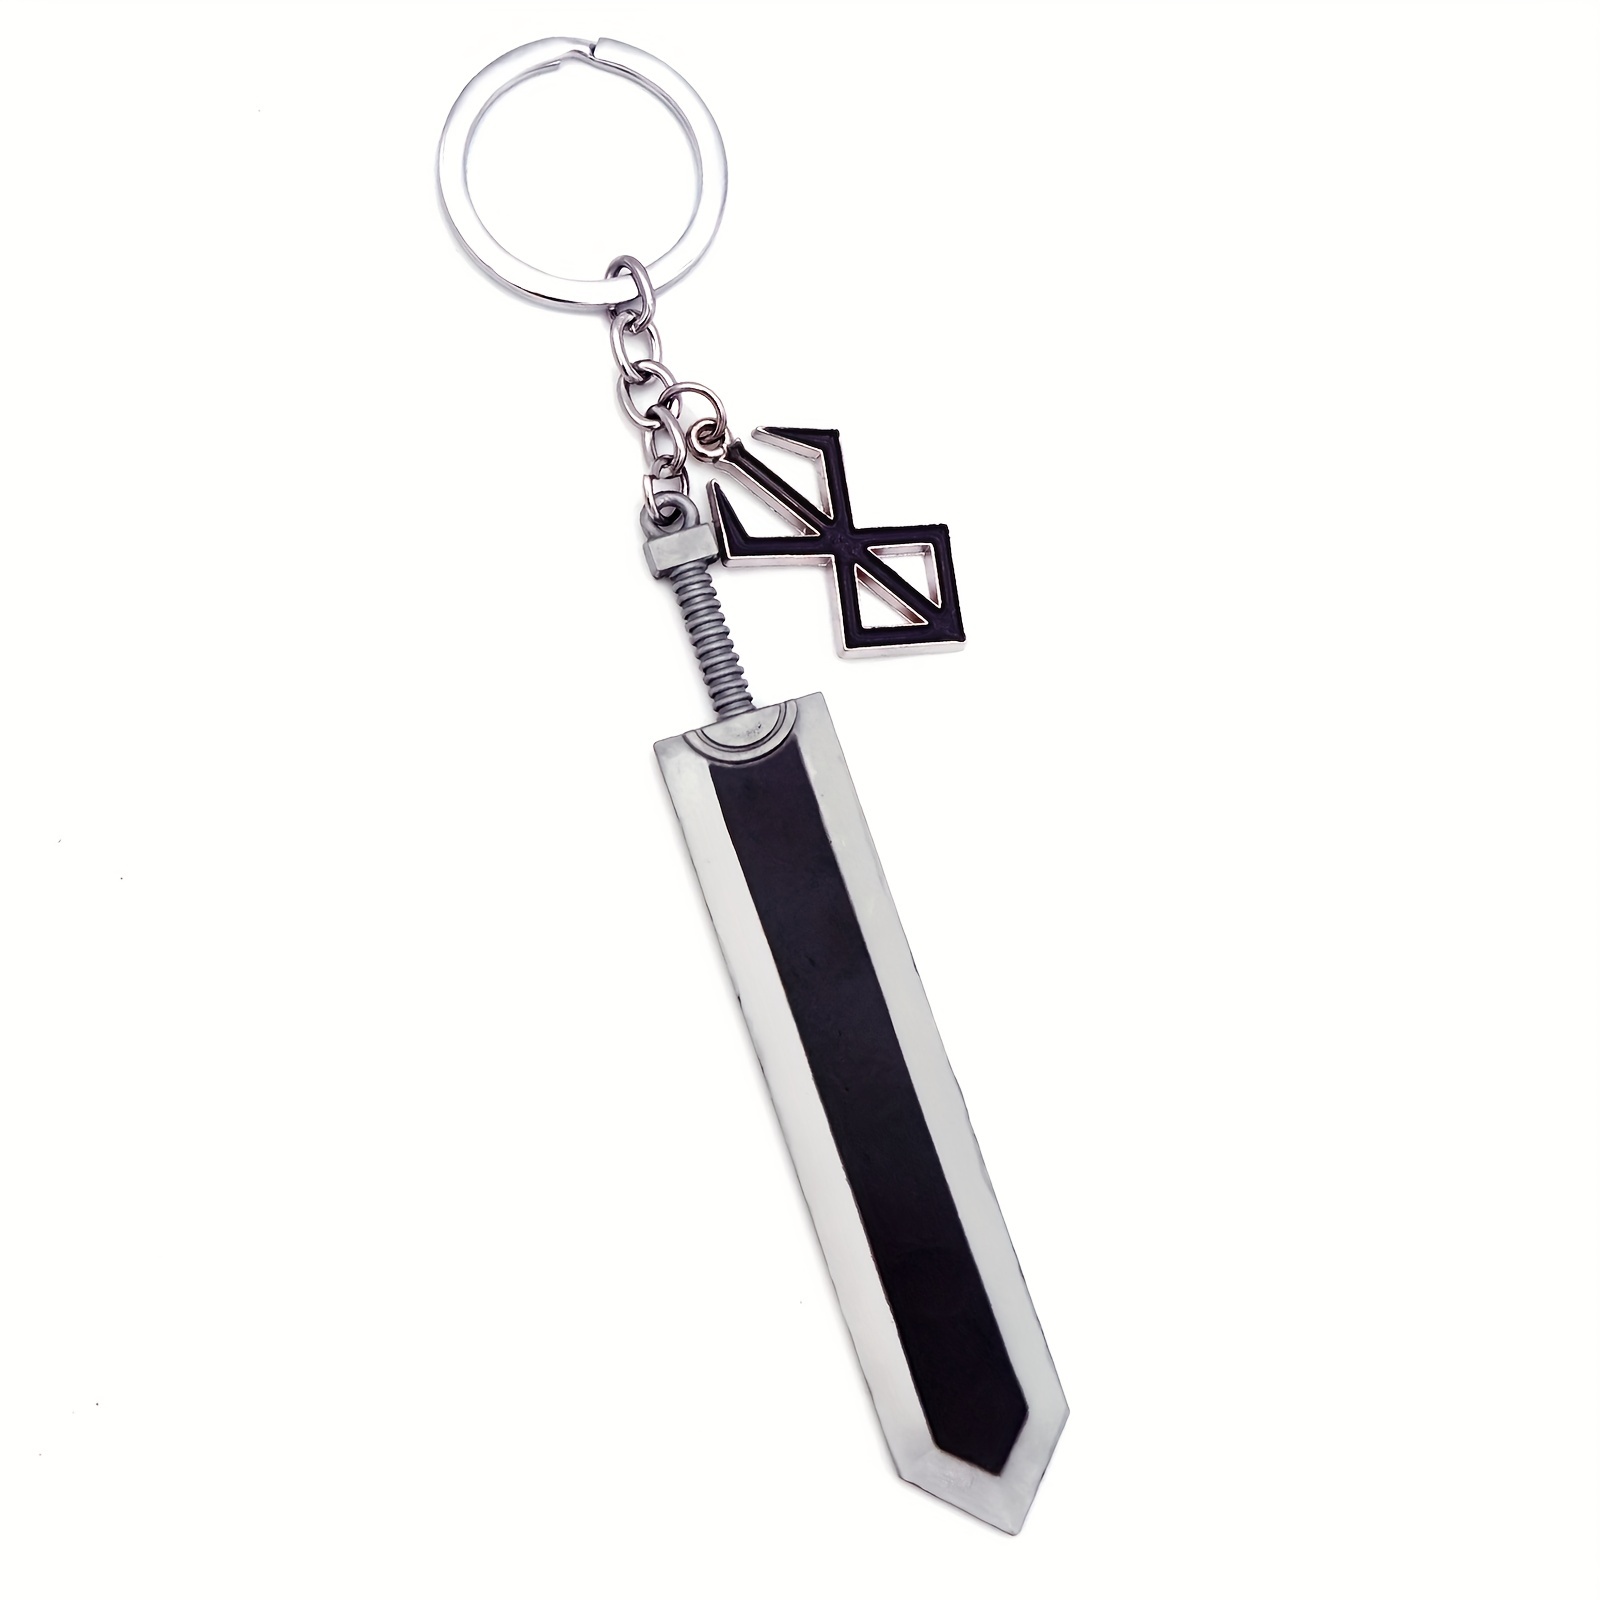 Key Chain Accessories Black, Metal Keychain Accessories